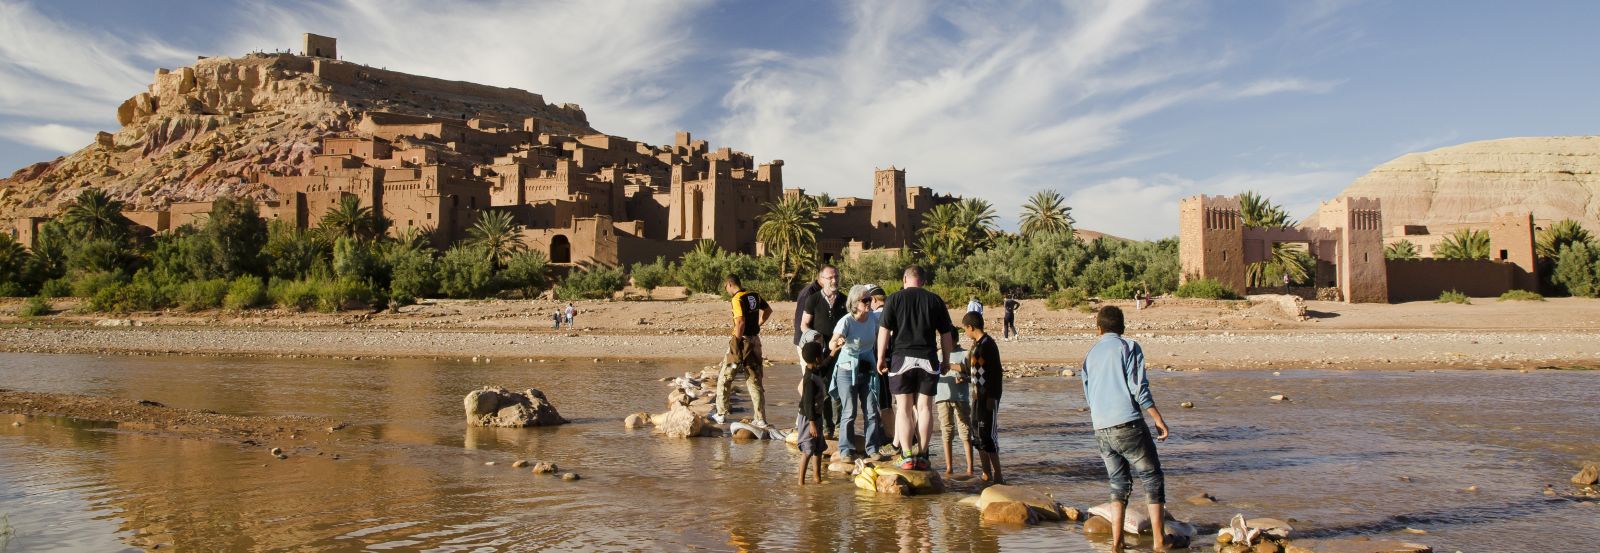 Enduro potovanje - Maroko